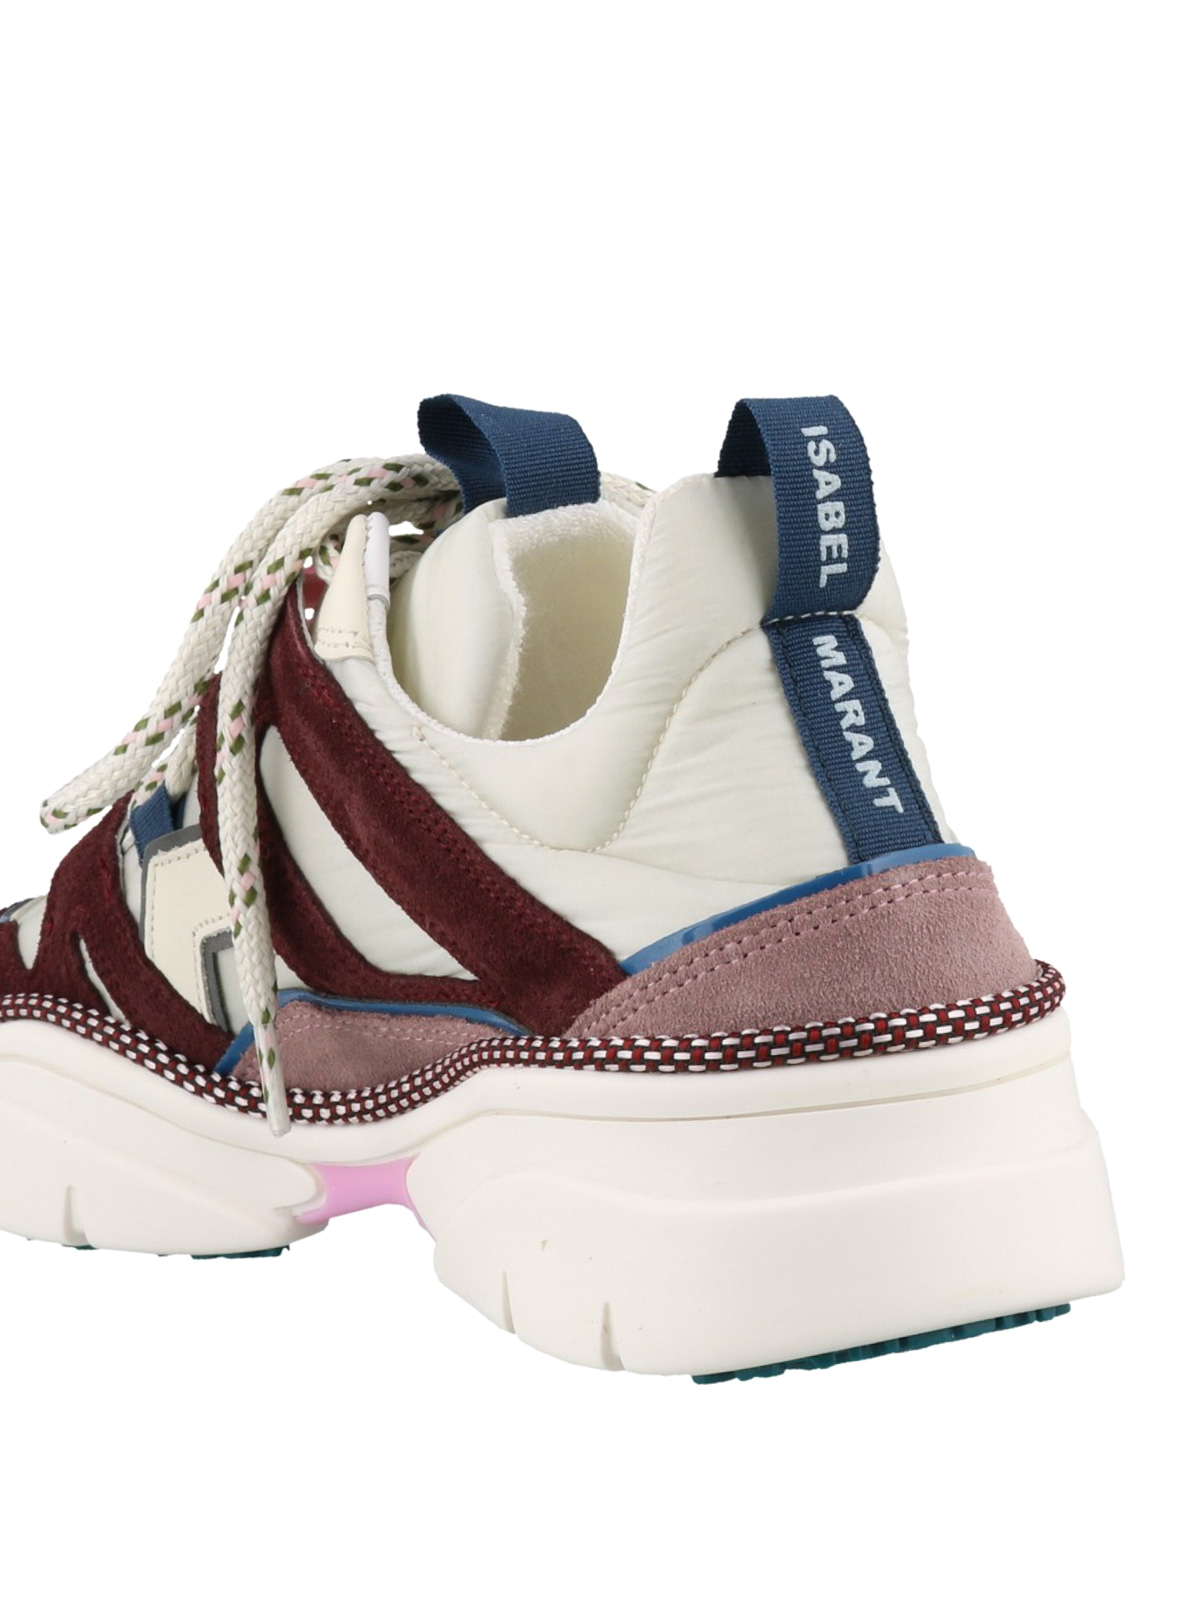 Marant - Kindsay sneakers - BK0052A017S02LY | iKRIX.com